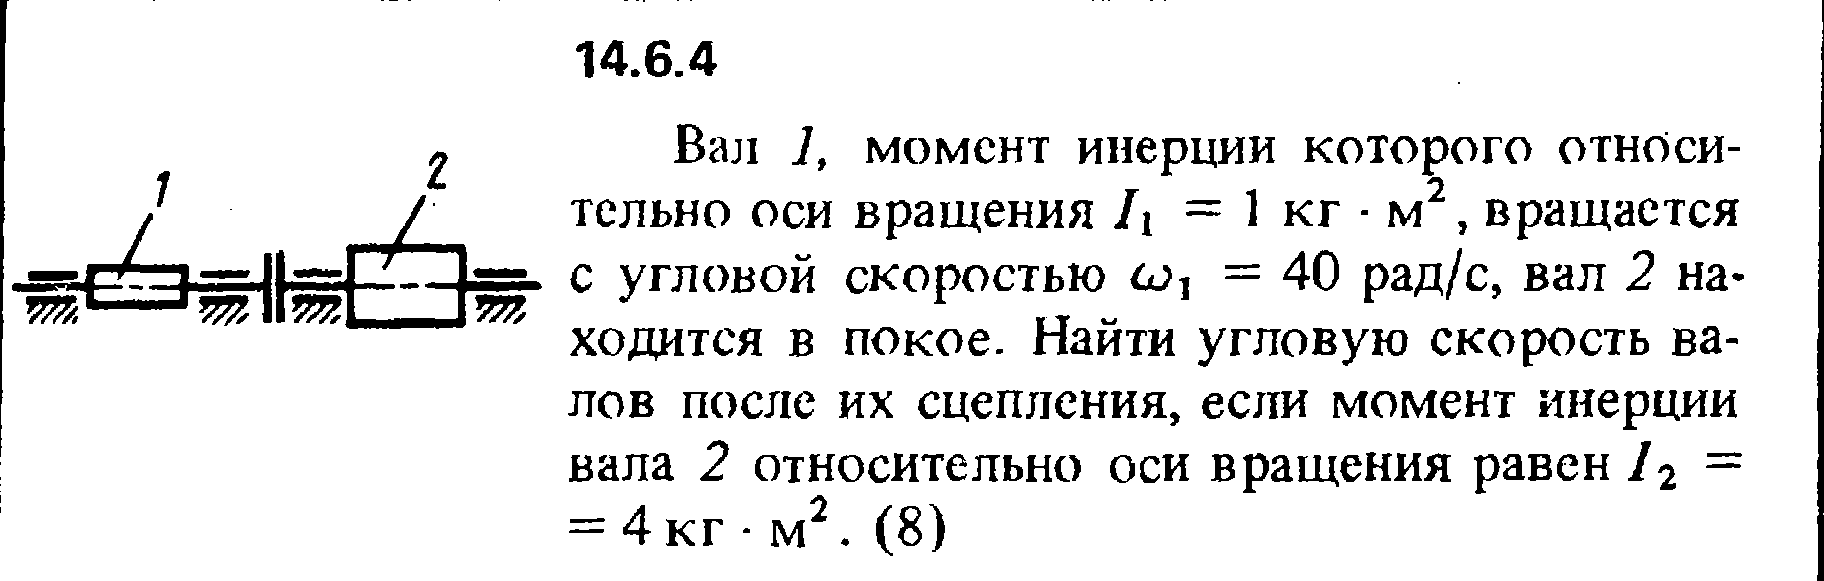 Решение задачи 14.6.4 из сборника Кепе О.Е. 1989 года